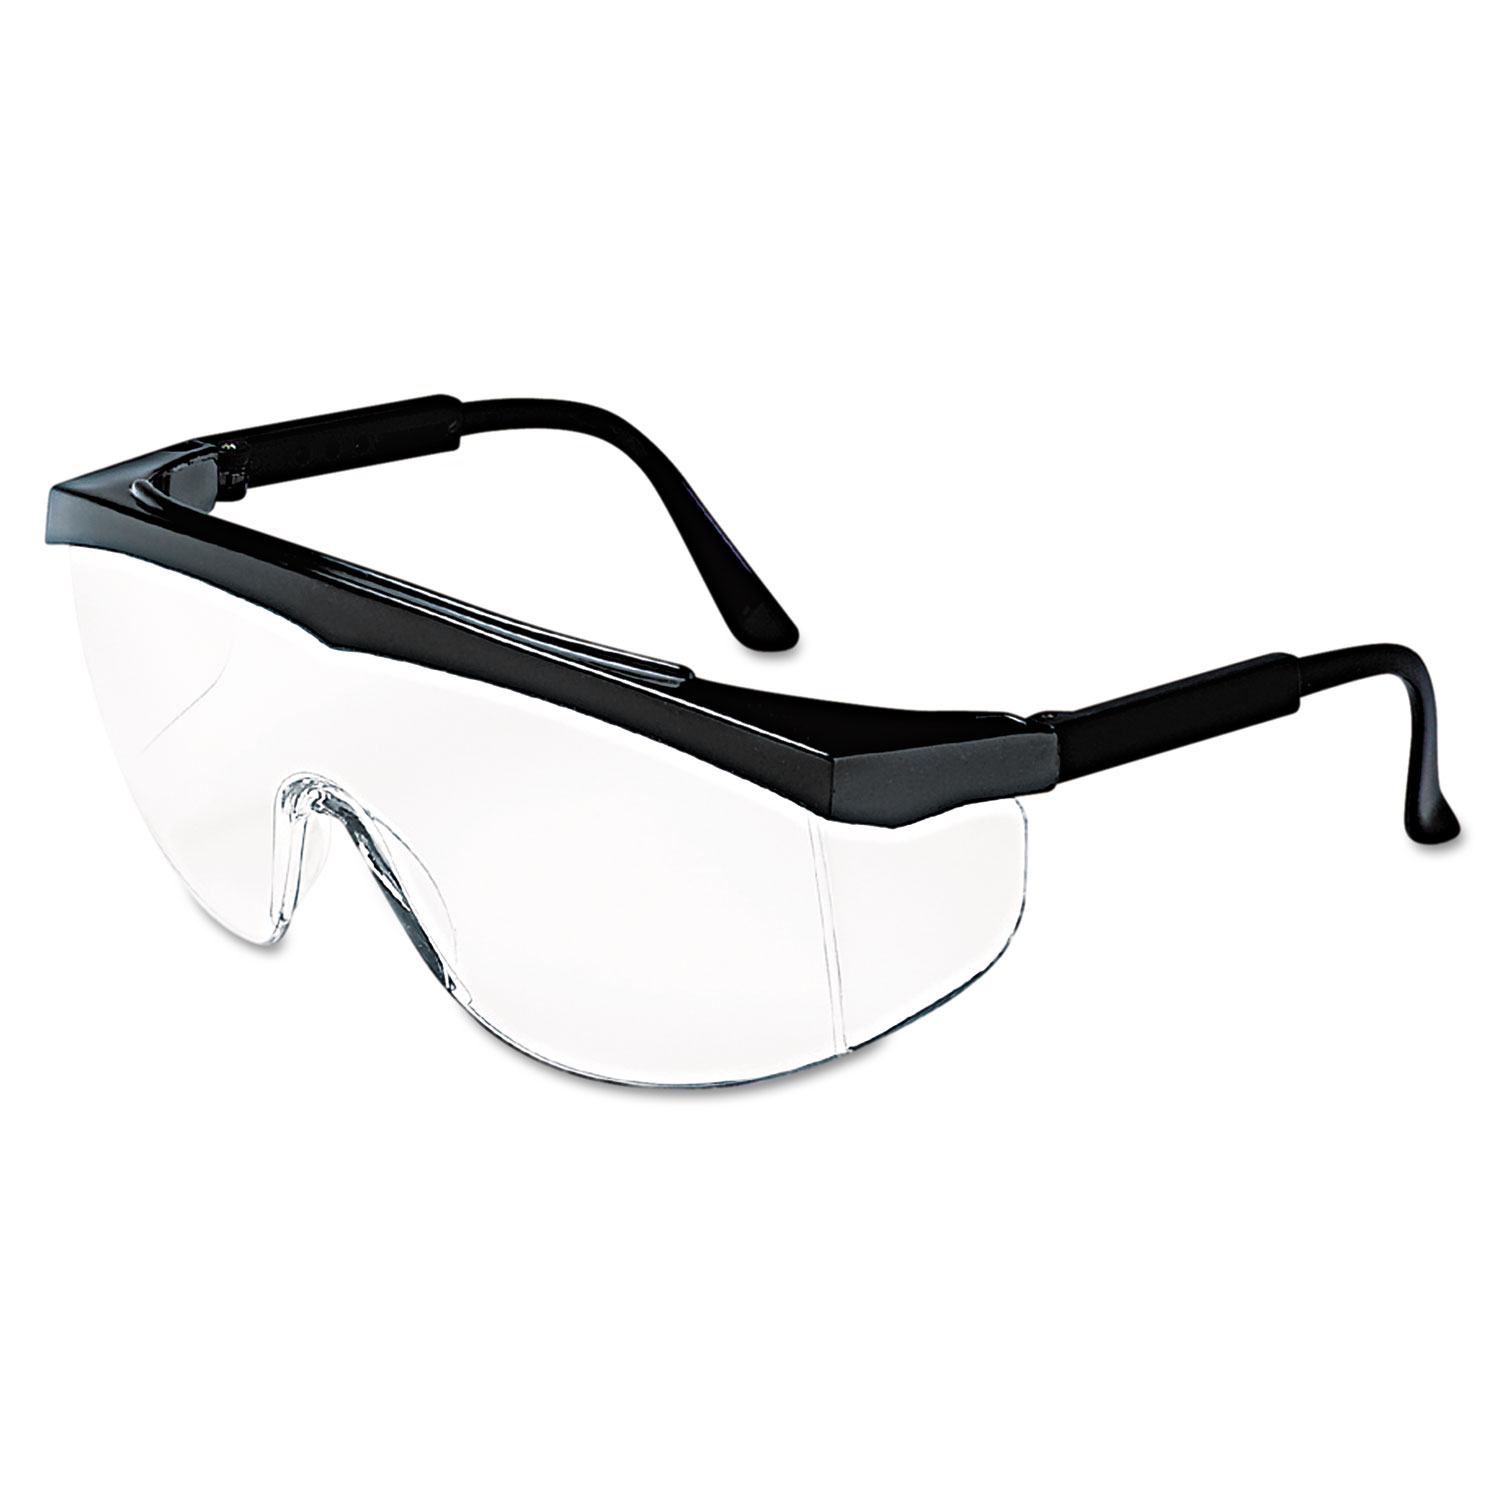  MCR Safety SS110 Stratos Safety Glasses, Black Frame, Clear Lens (CRWSS110BX) 